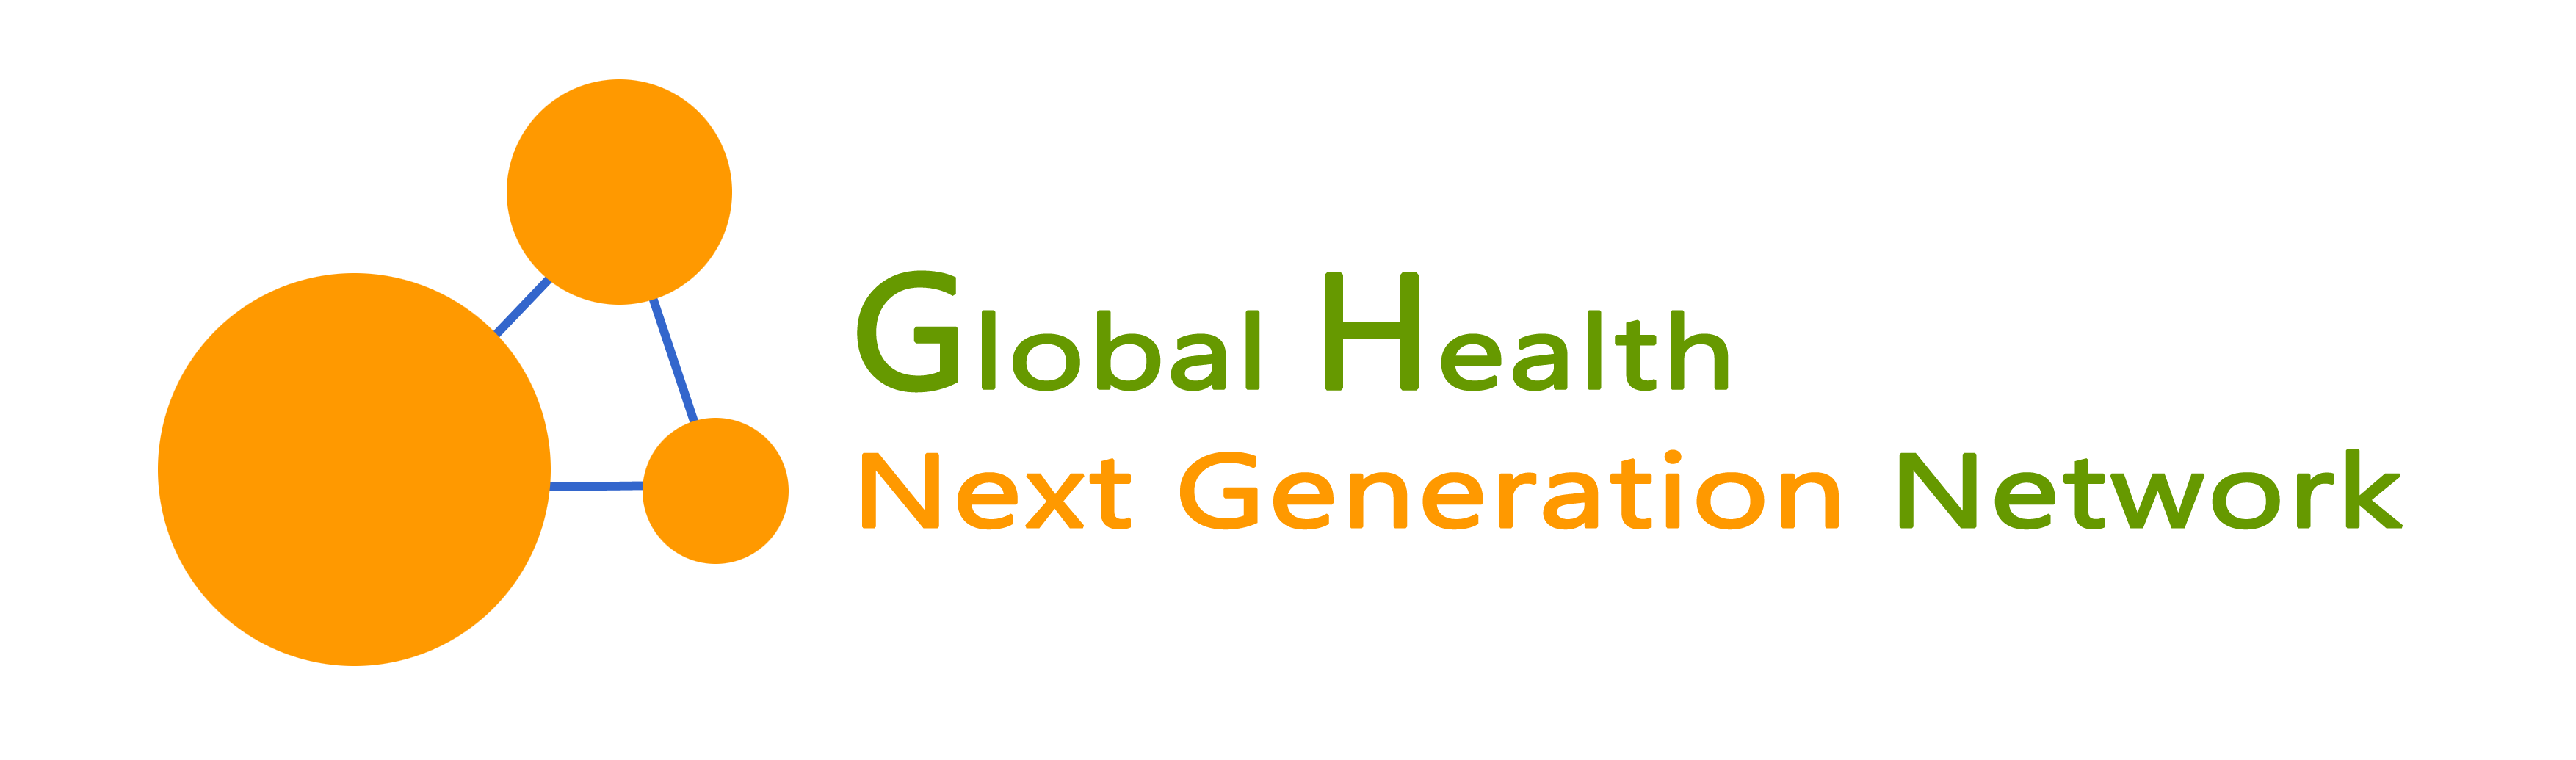 Global Health Next Generation Network